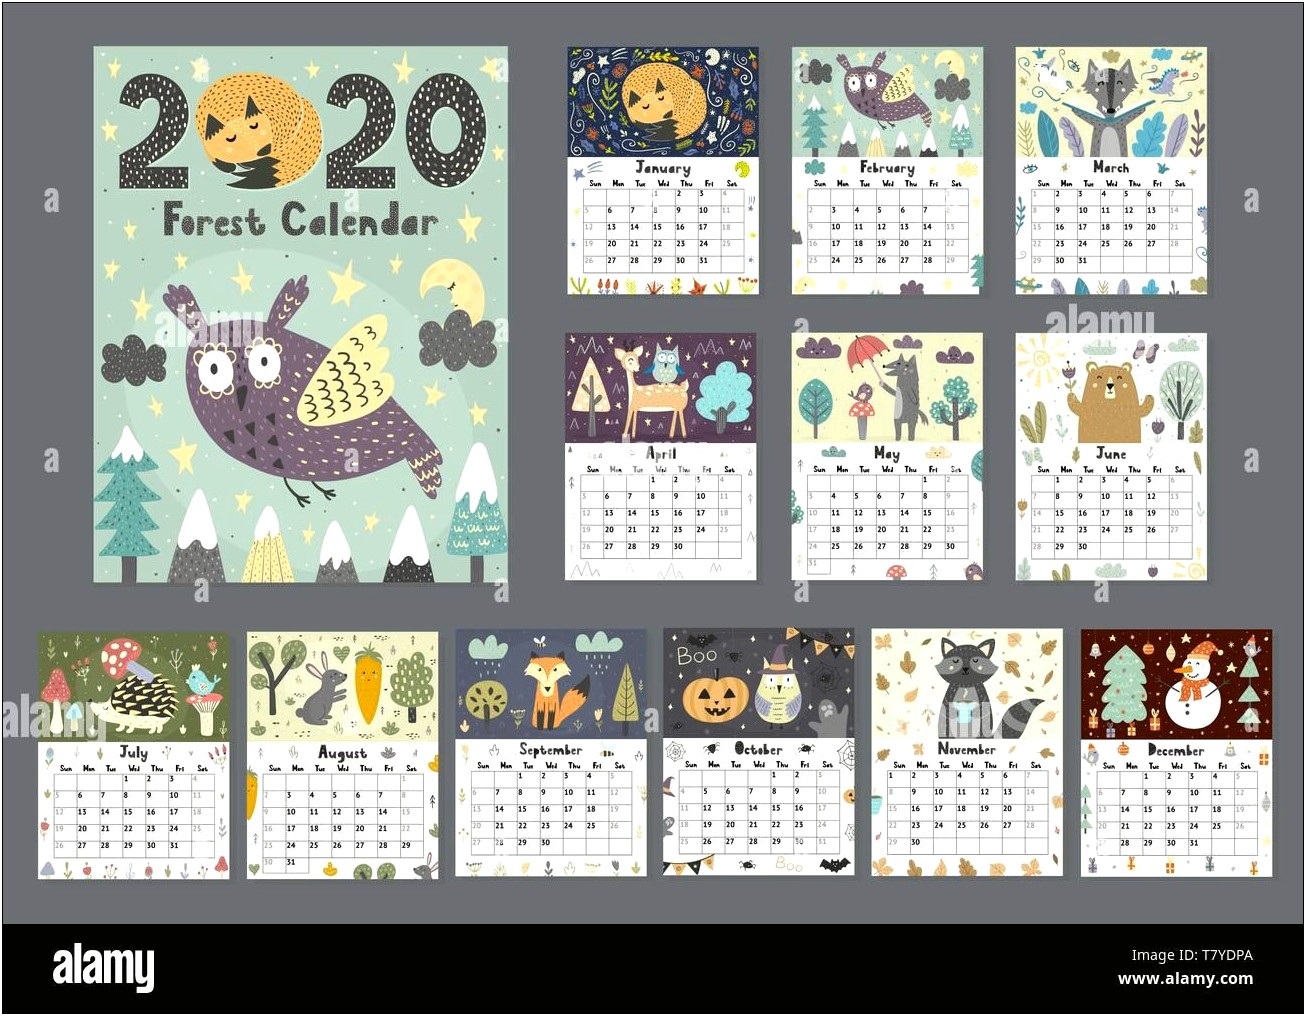 Free Illustrator Calendar Template 8.5x11